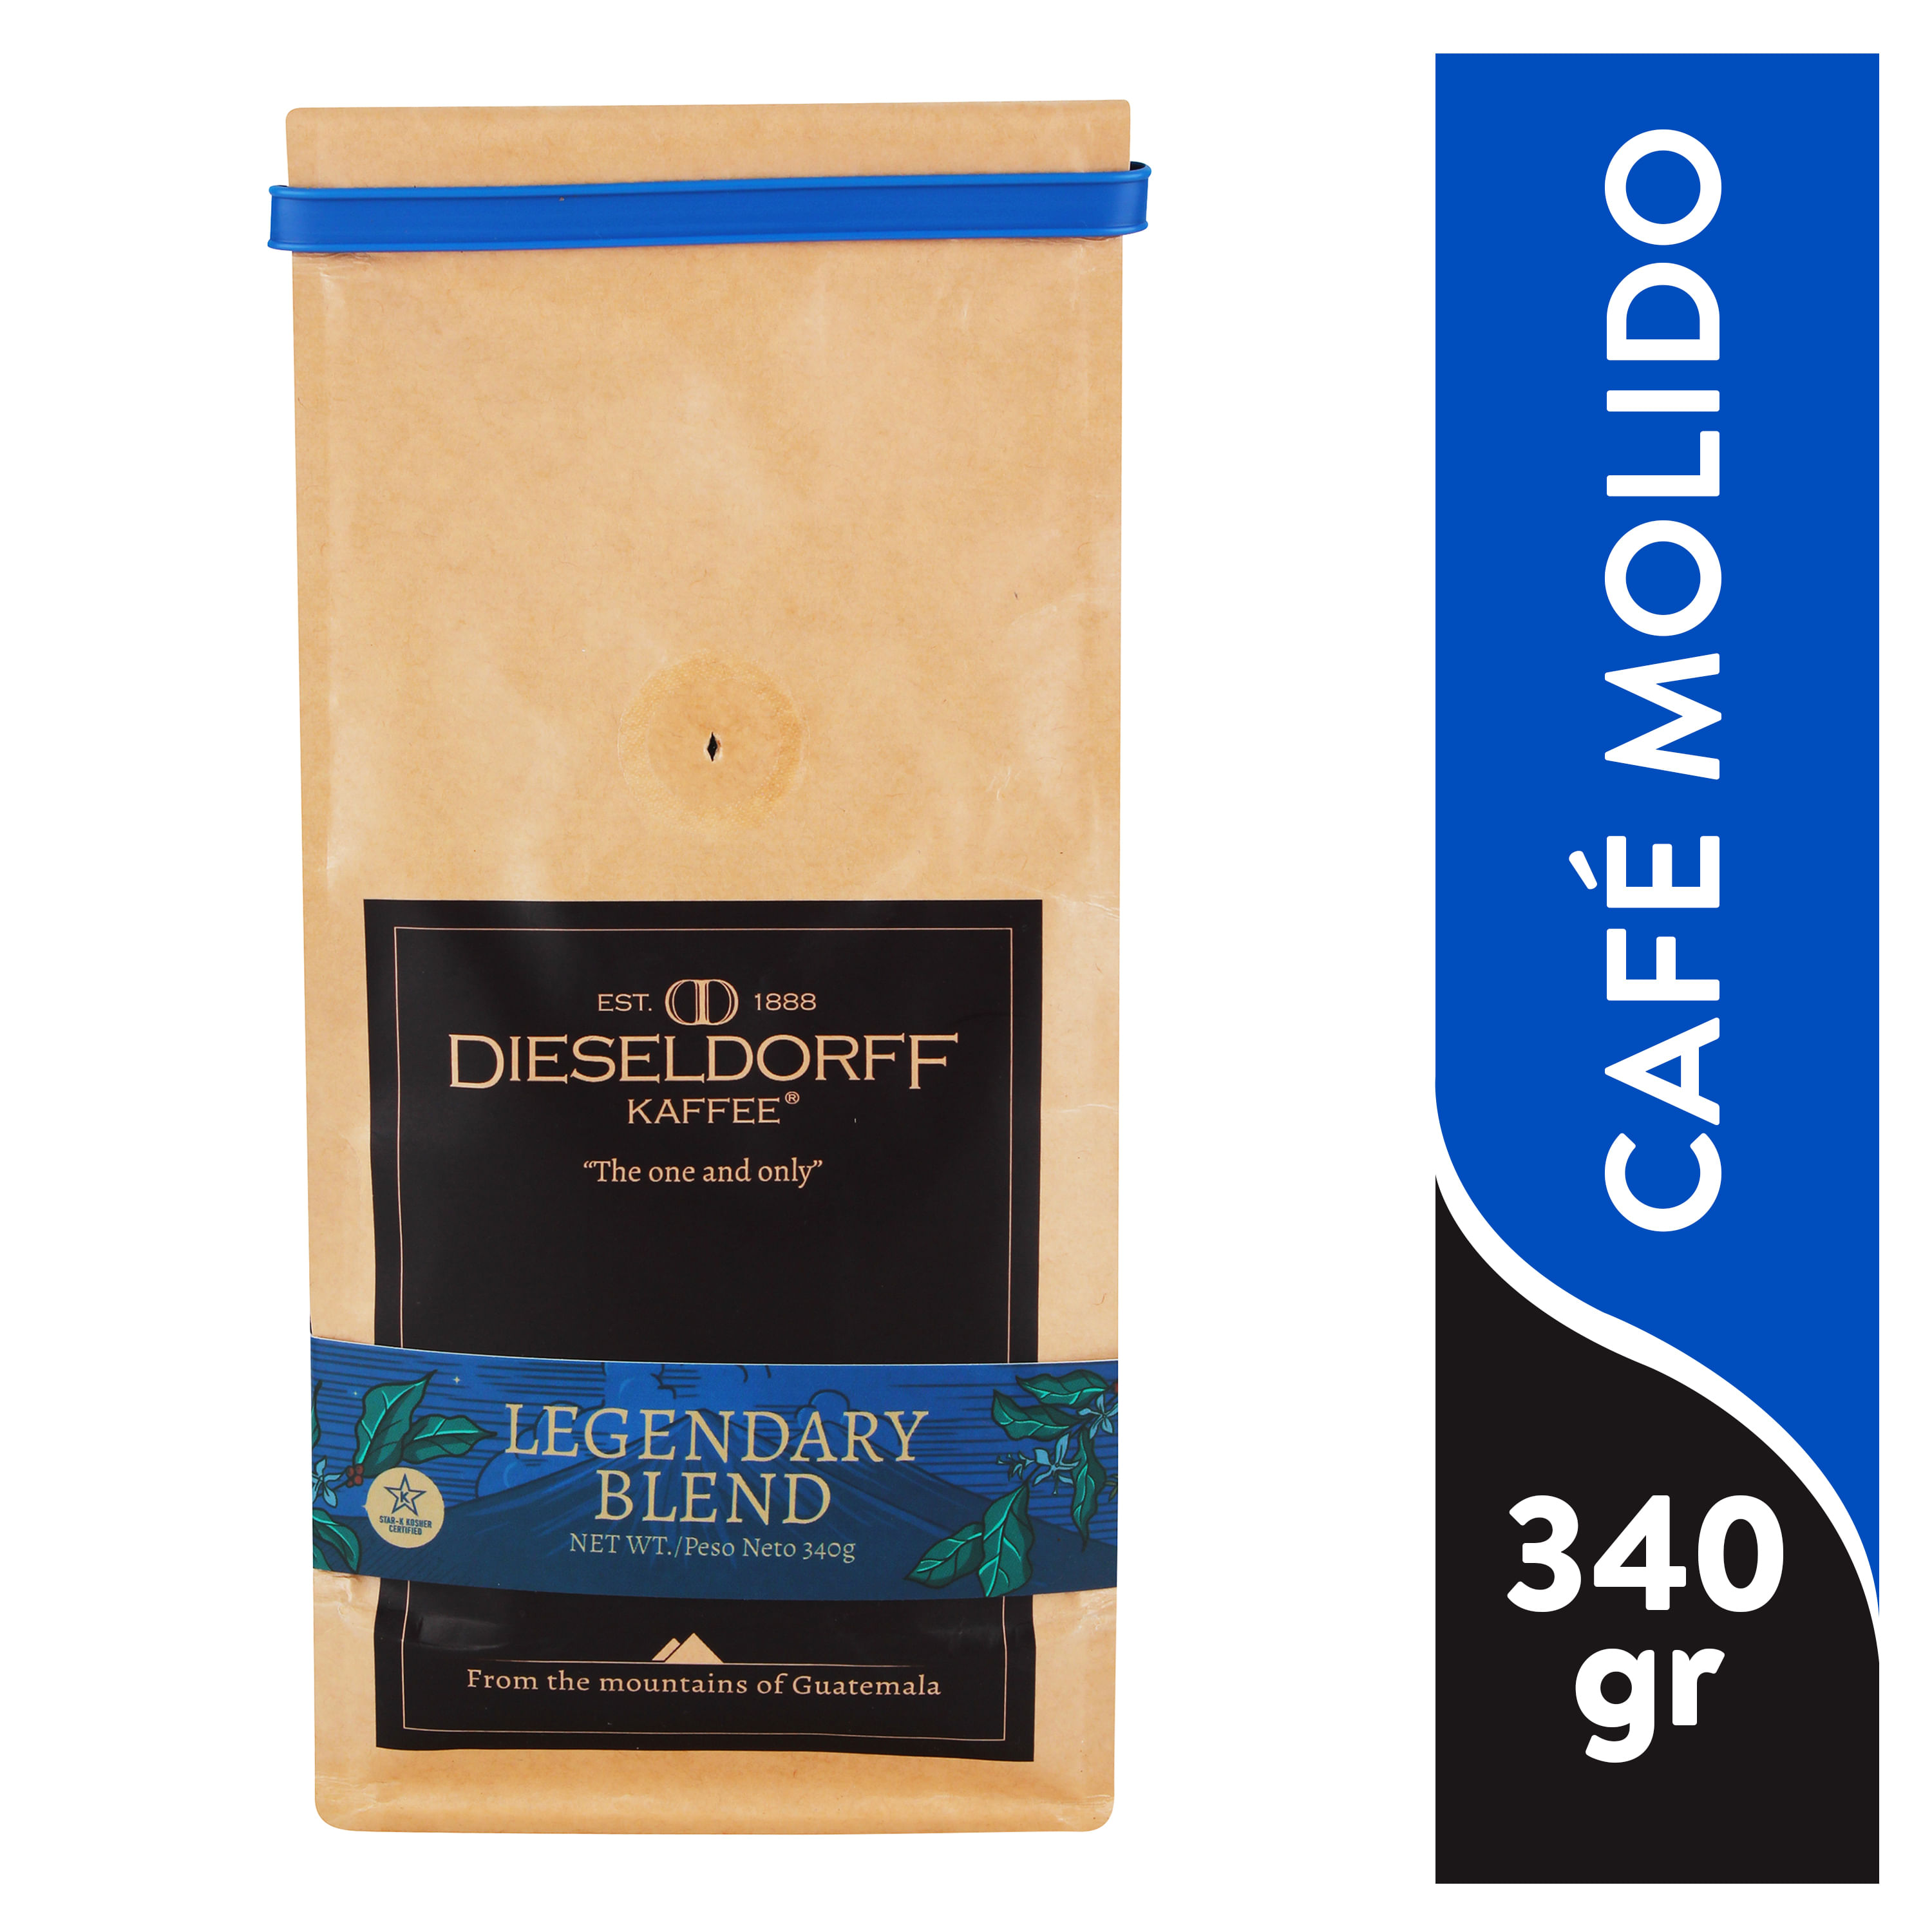 Cafe-Dieseldorff-Legendary-Blend-Molido-340gr-1-30636